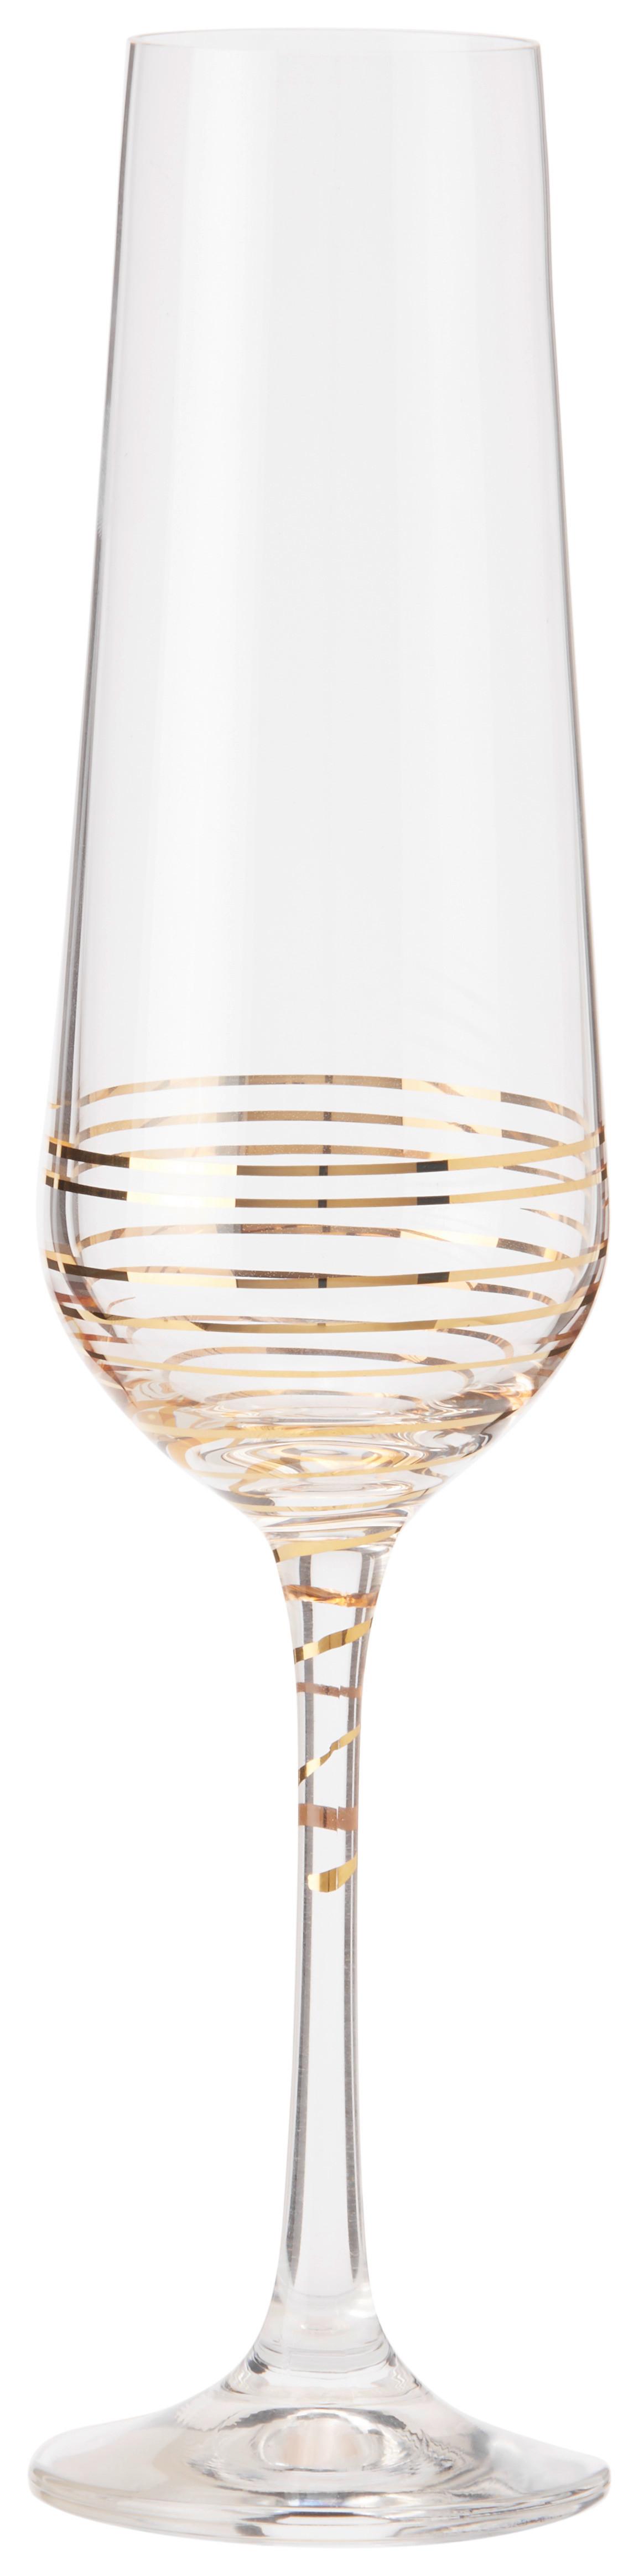 Pahar de vin spumant Elegance - clar/auriu, Modern, sticlă (0,2l) - Bohemia